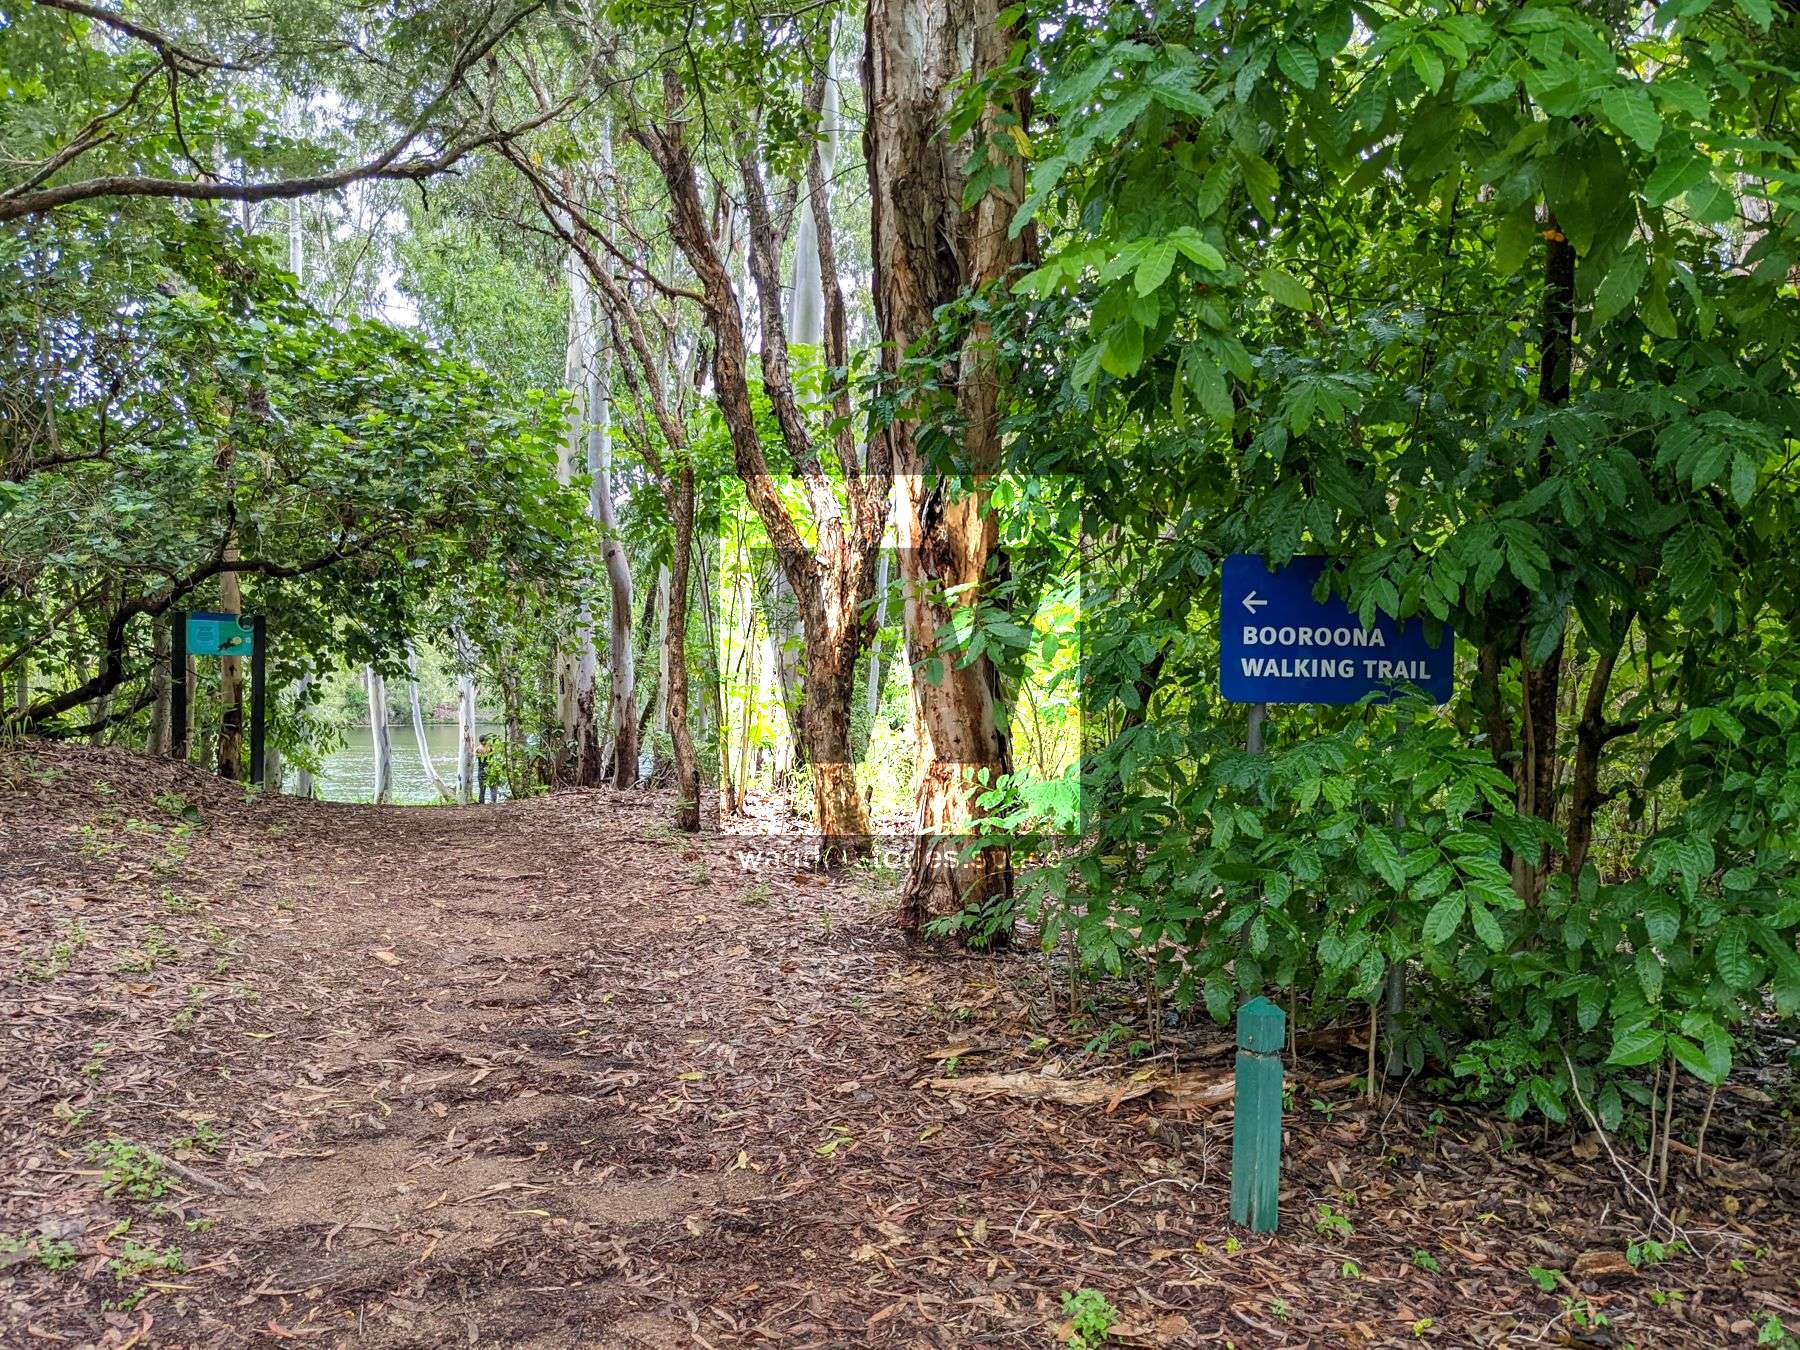 booroona trail sign